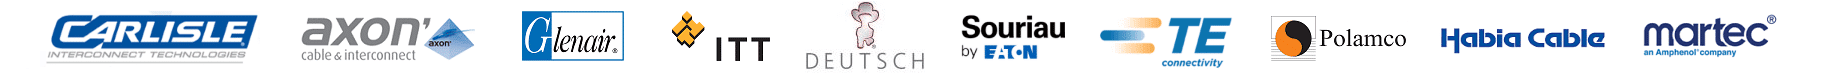 carlisle-axon-Glenair-ITT-Deutsch-Souriau-TE-Polamco-rms-habia-martec logos